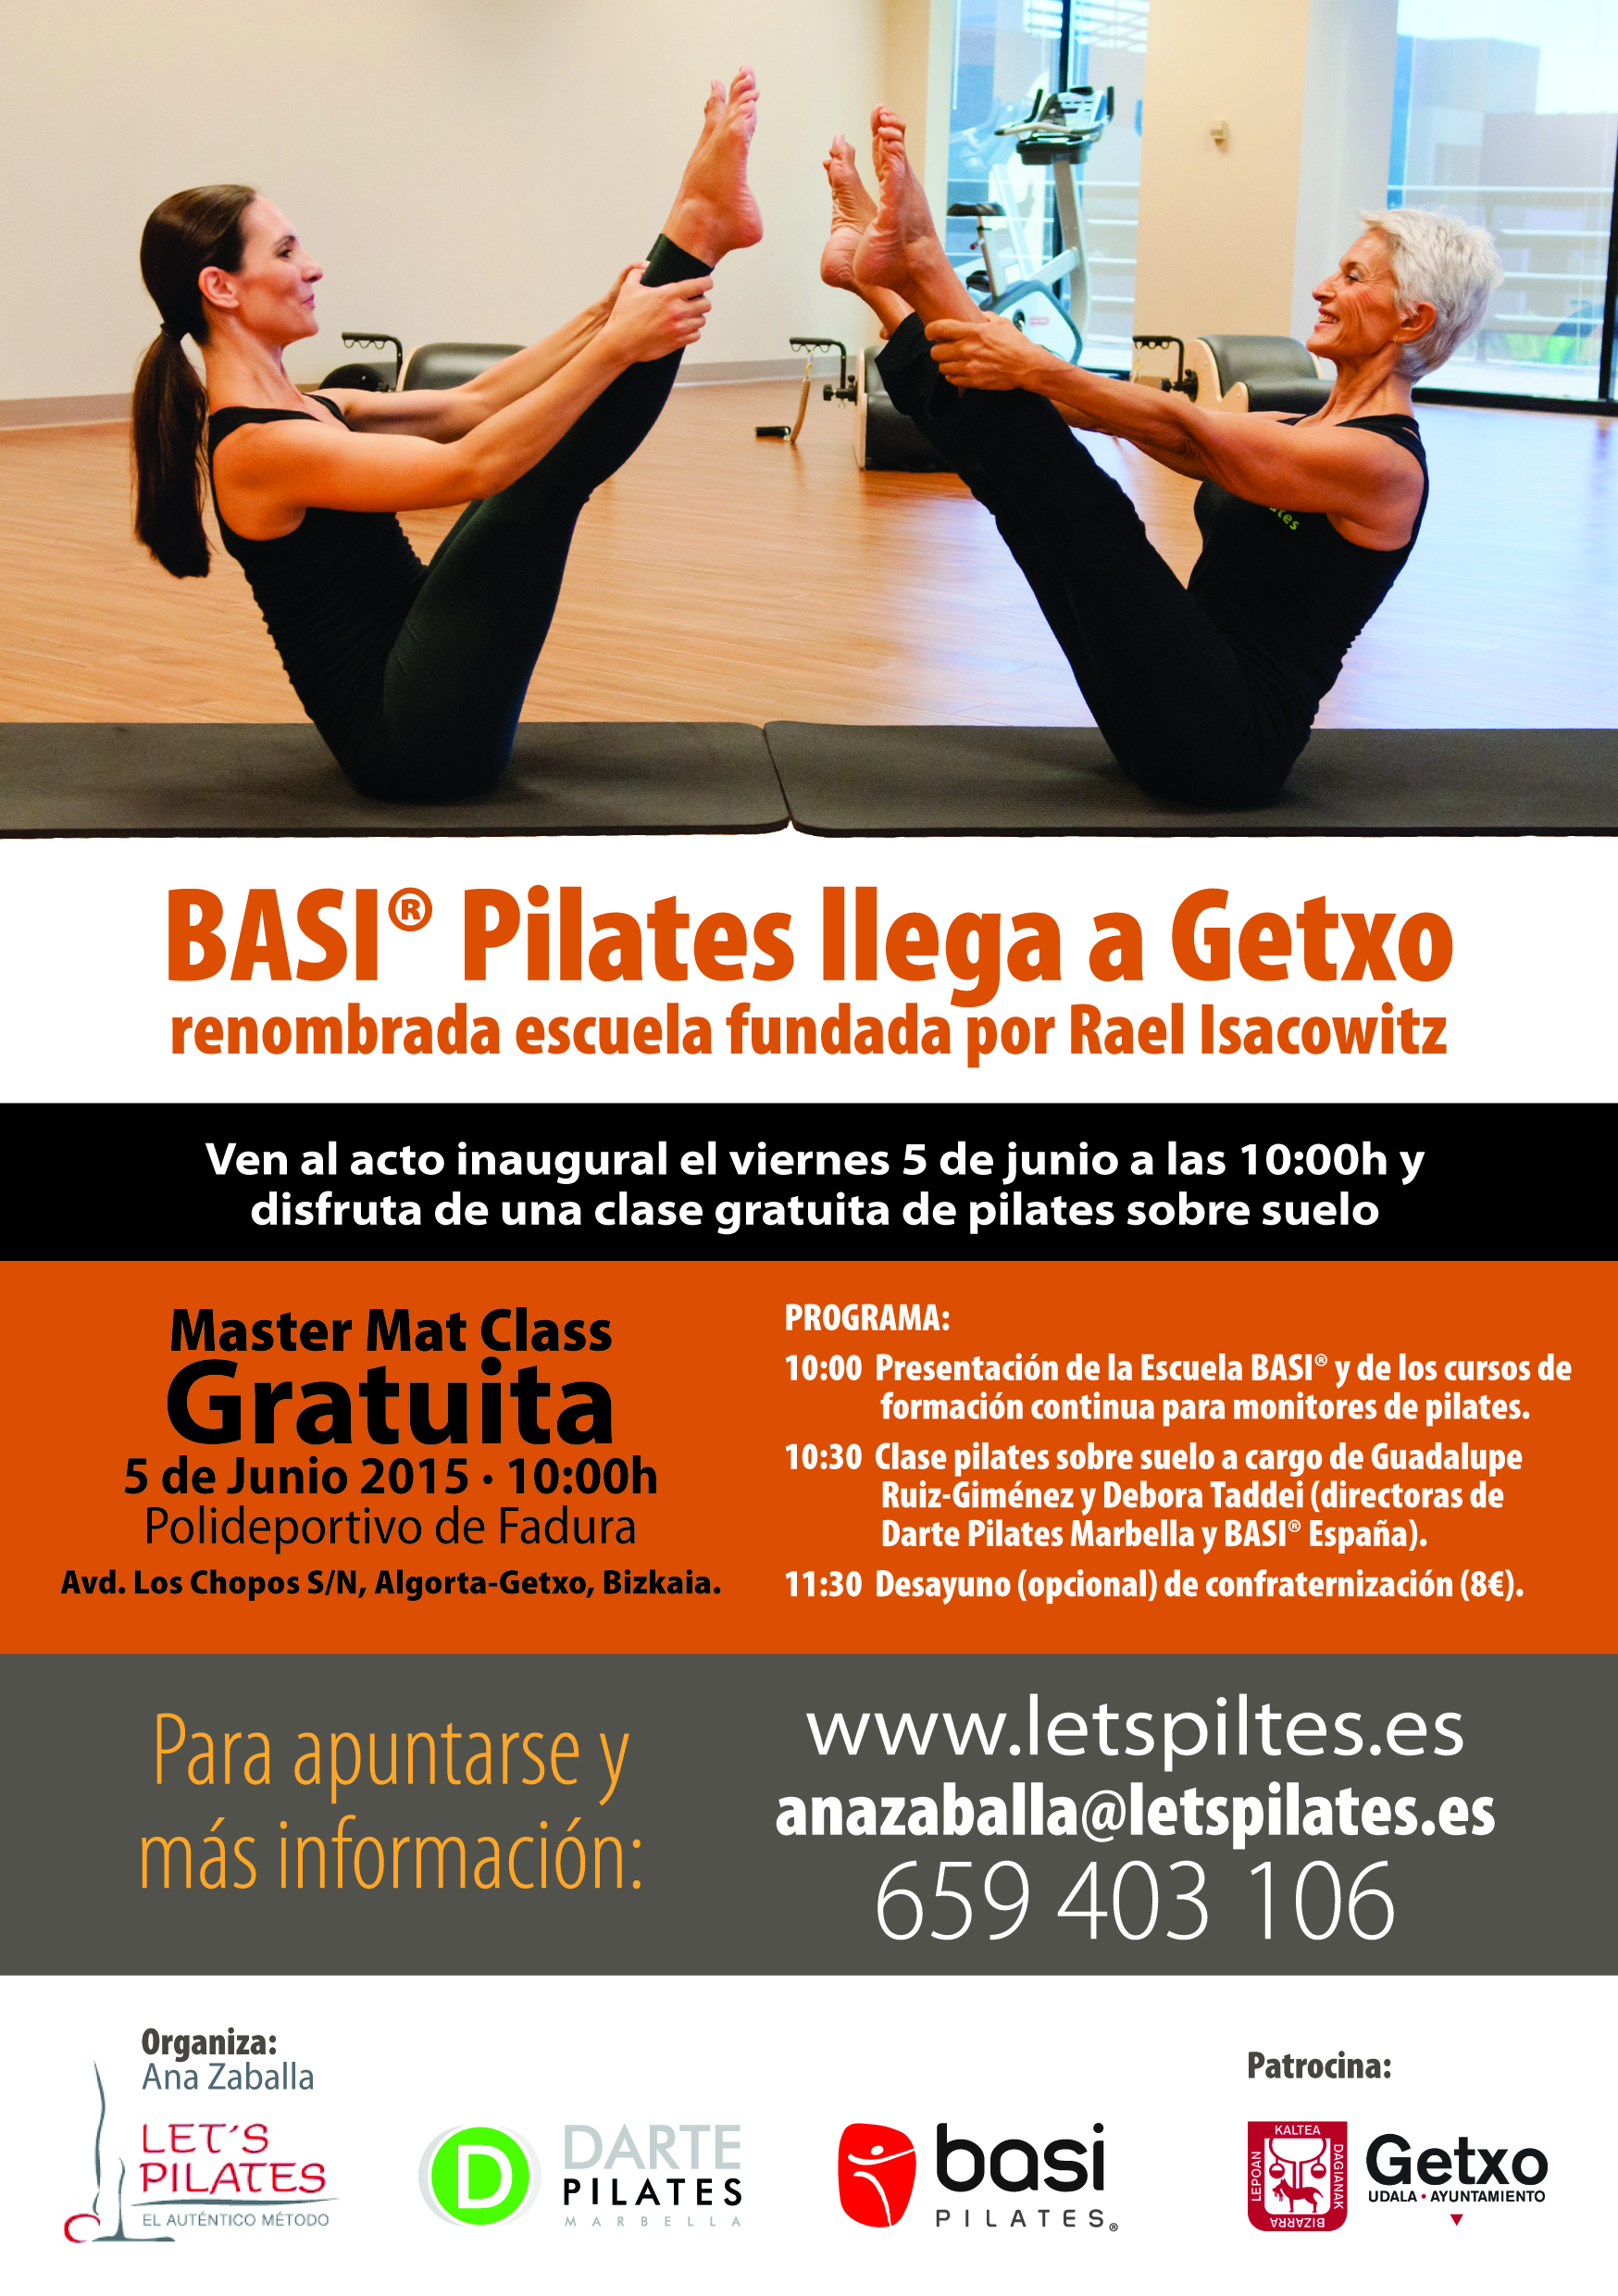 Basi Pilates llega a Getxo